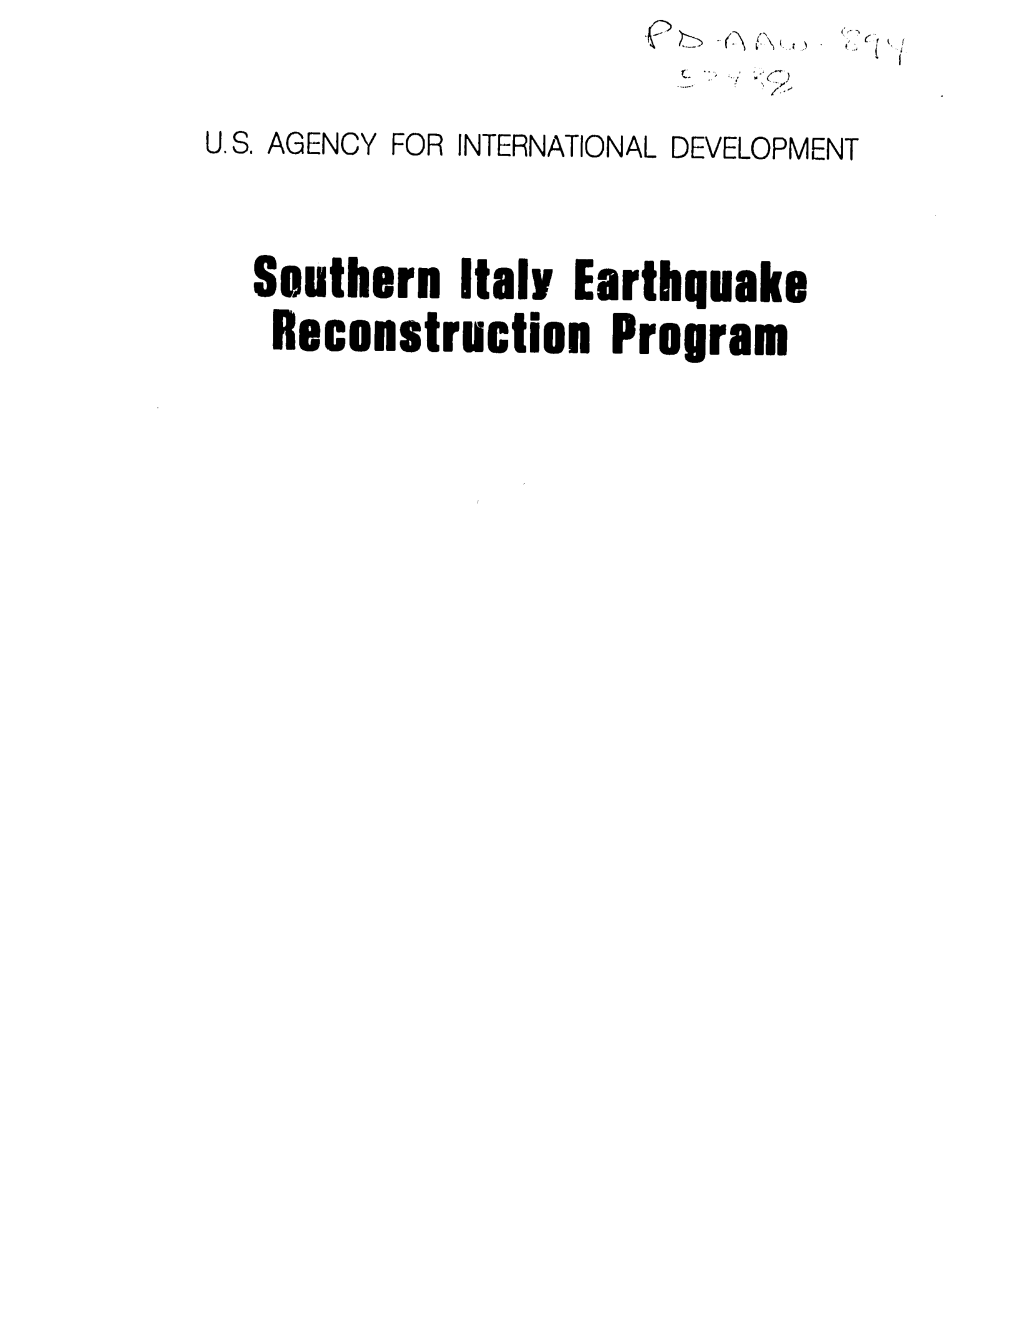 Reconstruction Program 1976 - 1982 HART1IQUAKE RECONSTRJCION Fiti (LI , ITIALY